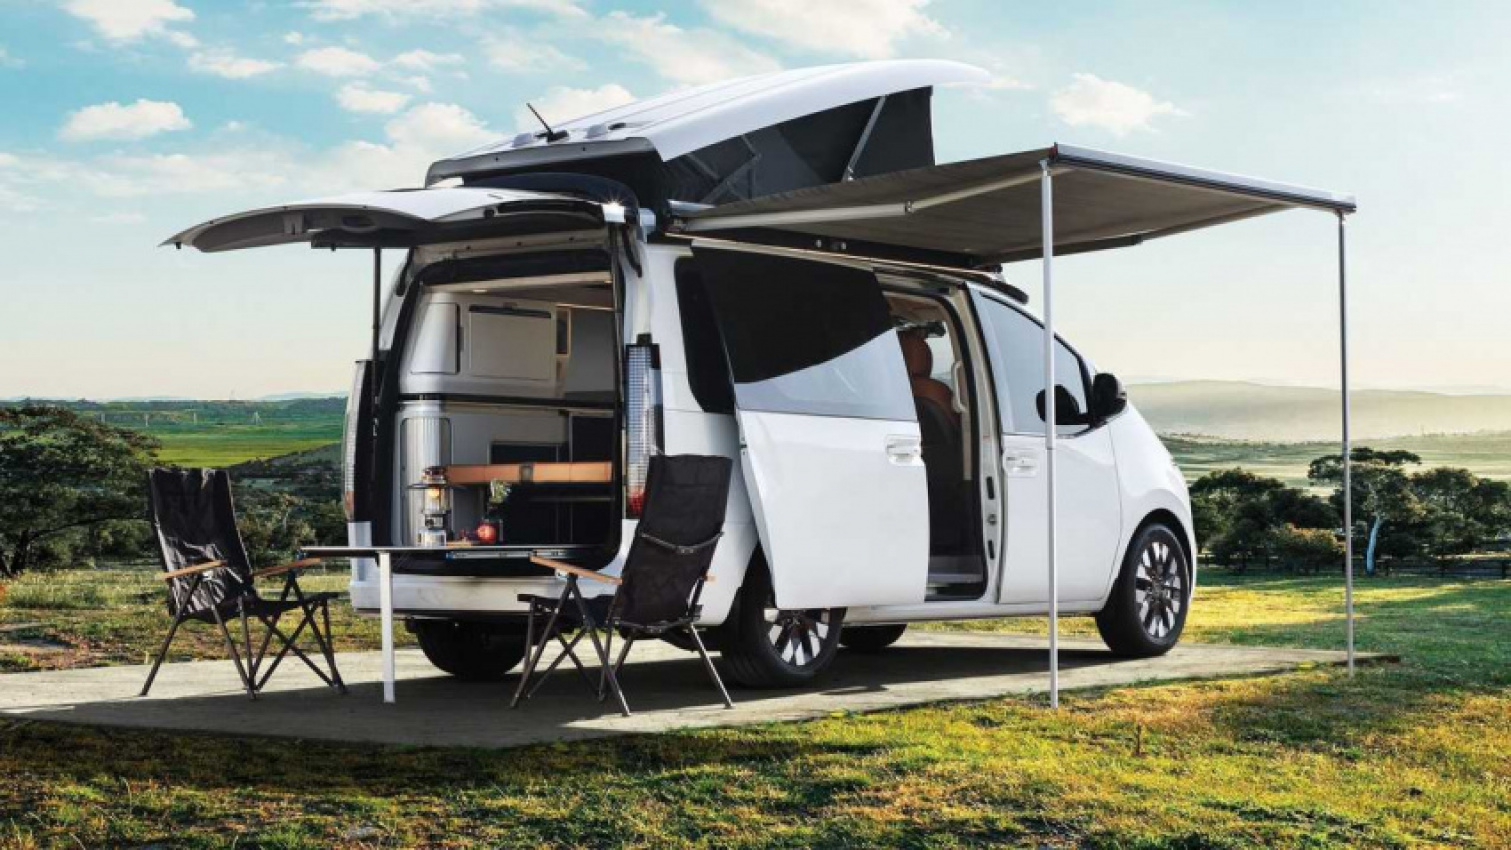 autos, cars, hyundai, hyundai staria lounge camper debuts with pop-up tent, air mattress